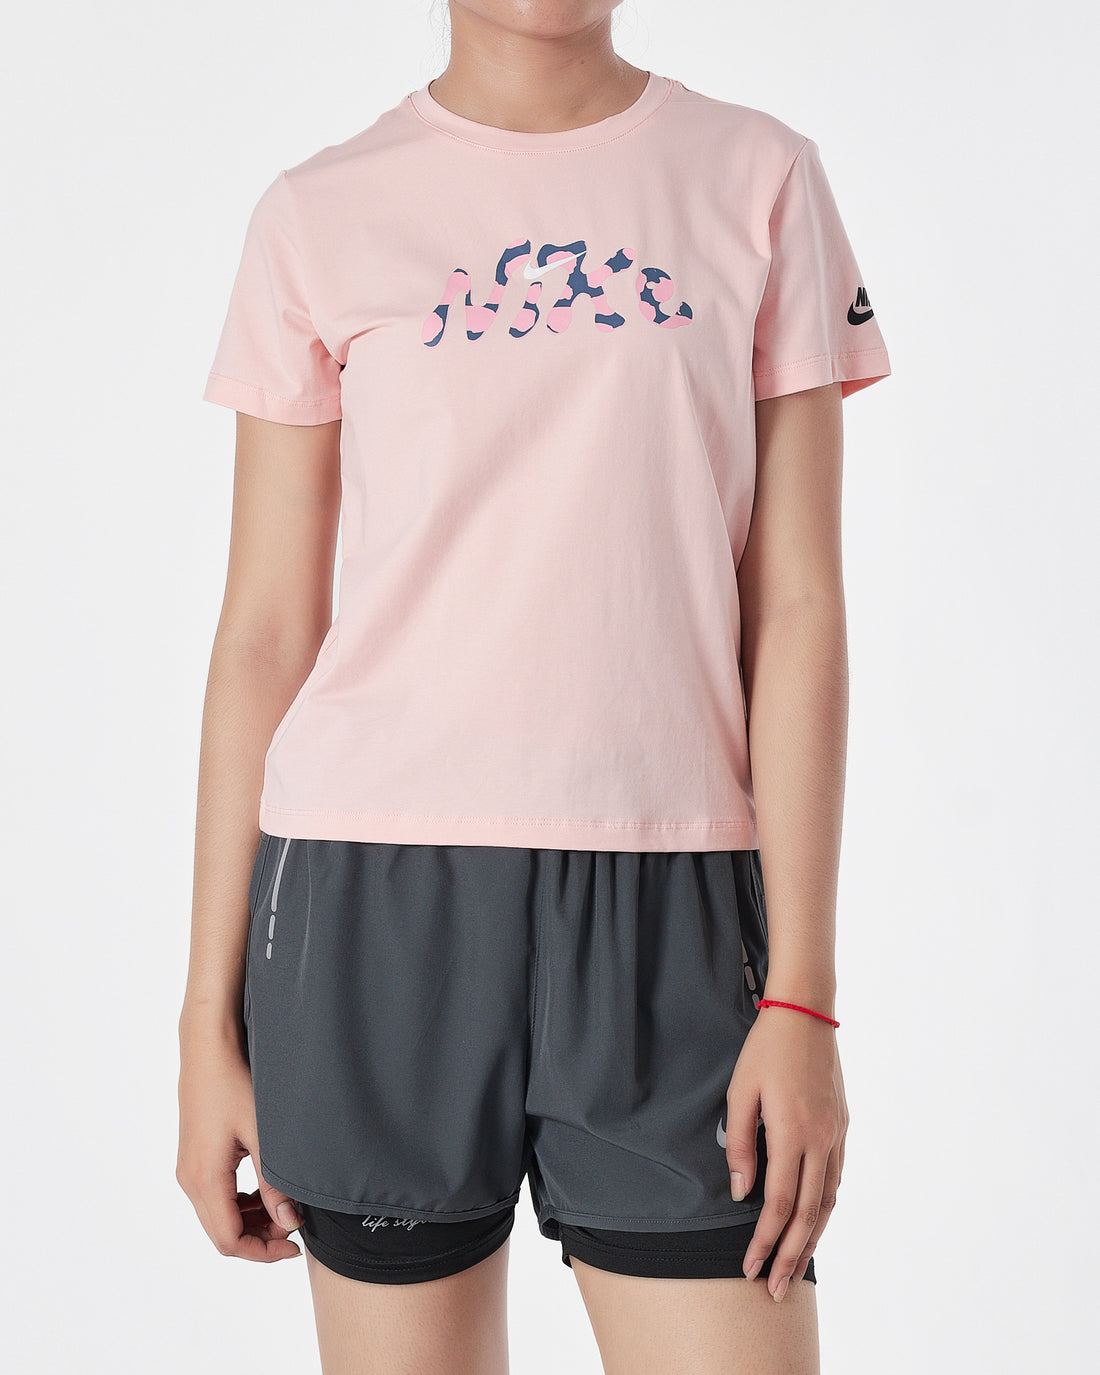 NIK Graffiti Logo Lady Pink T-Shirt 13.90